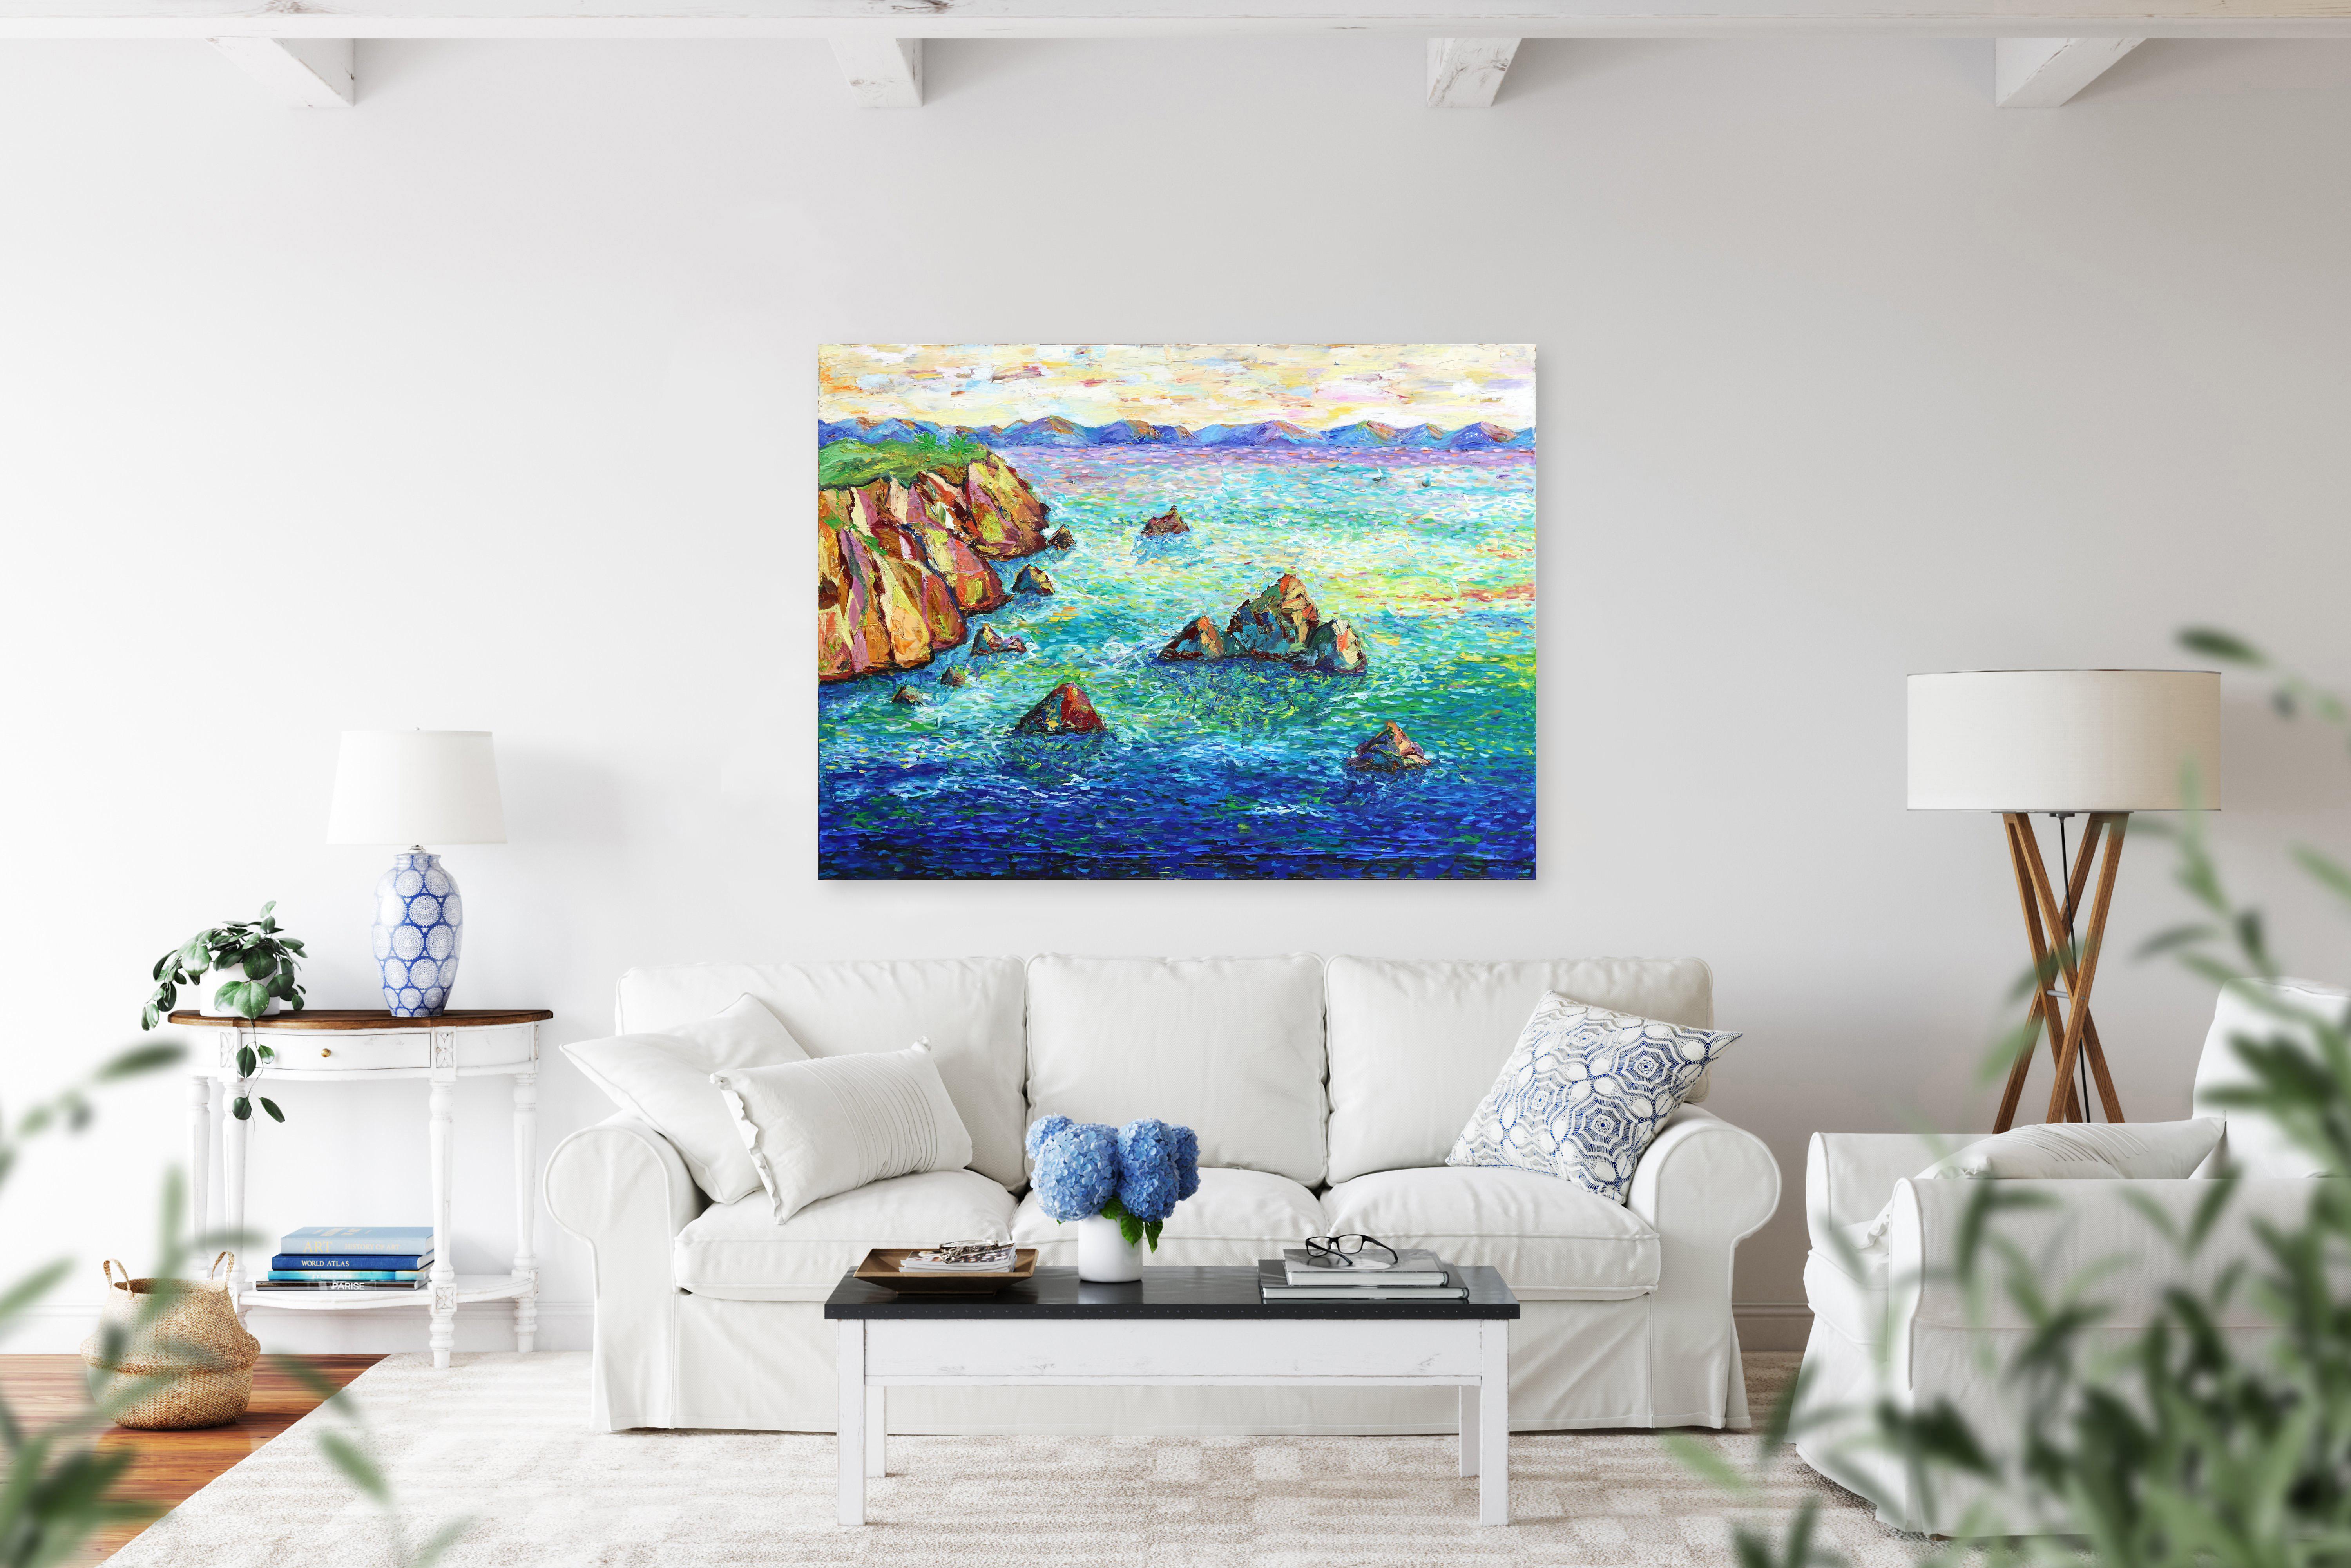 Big Sur Views - Painting by Katharina Husslein